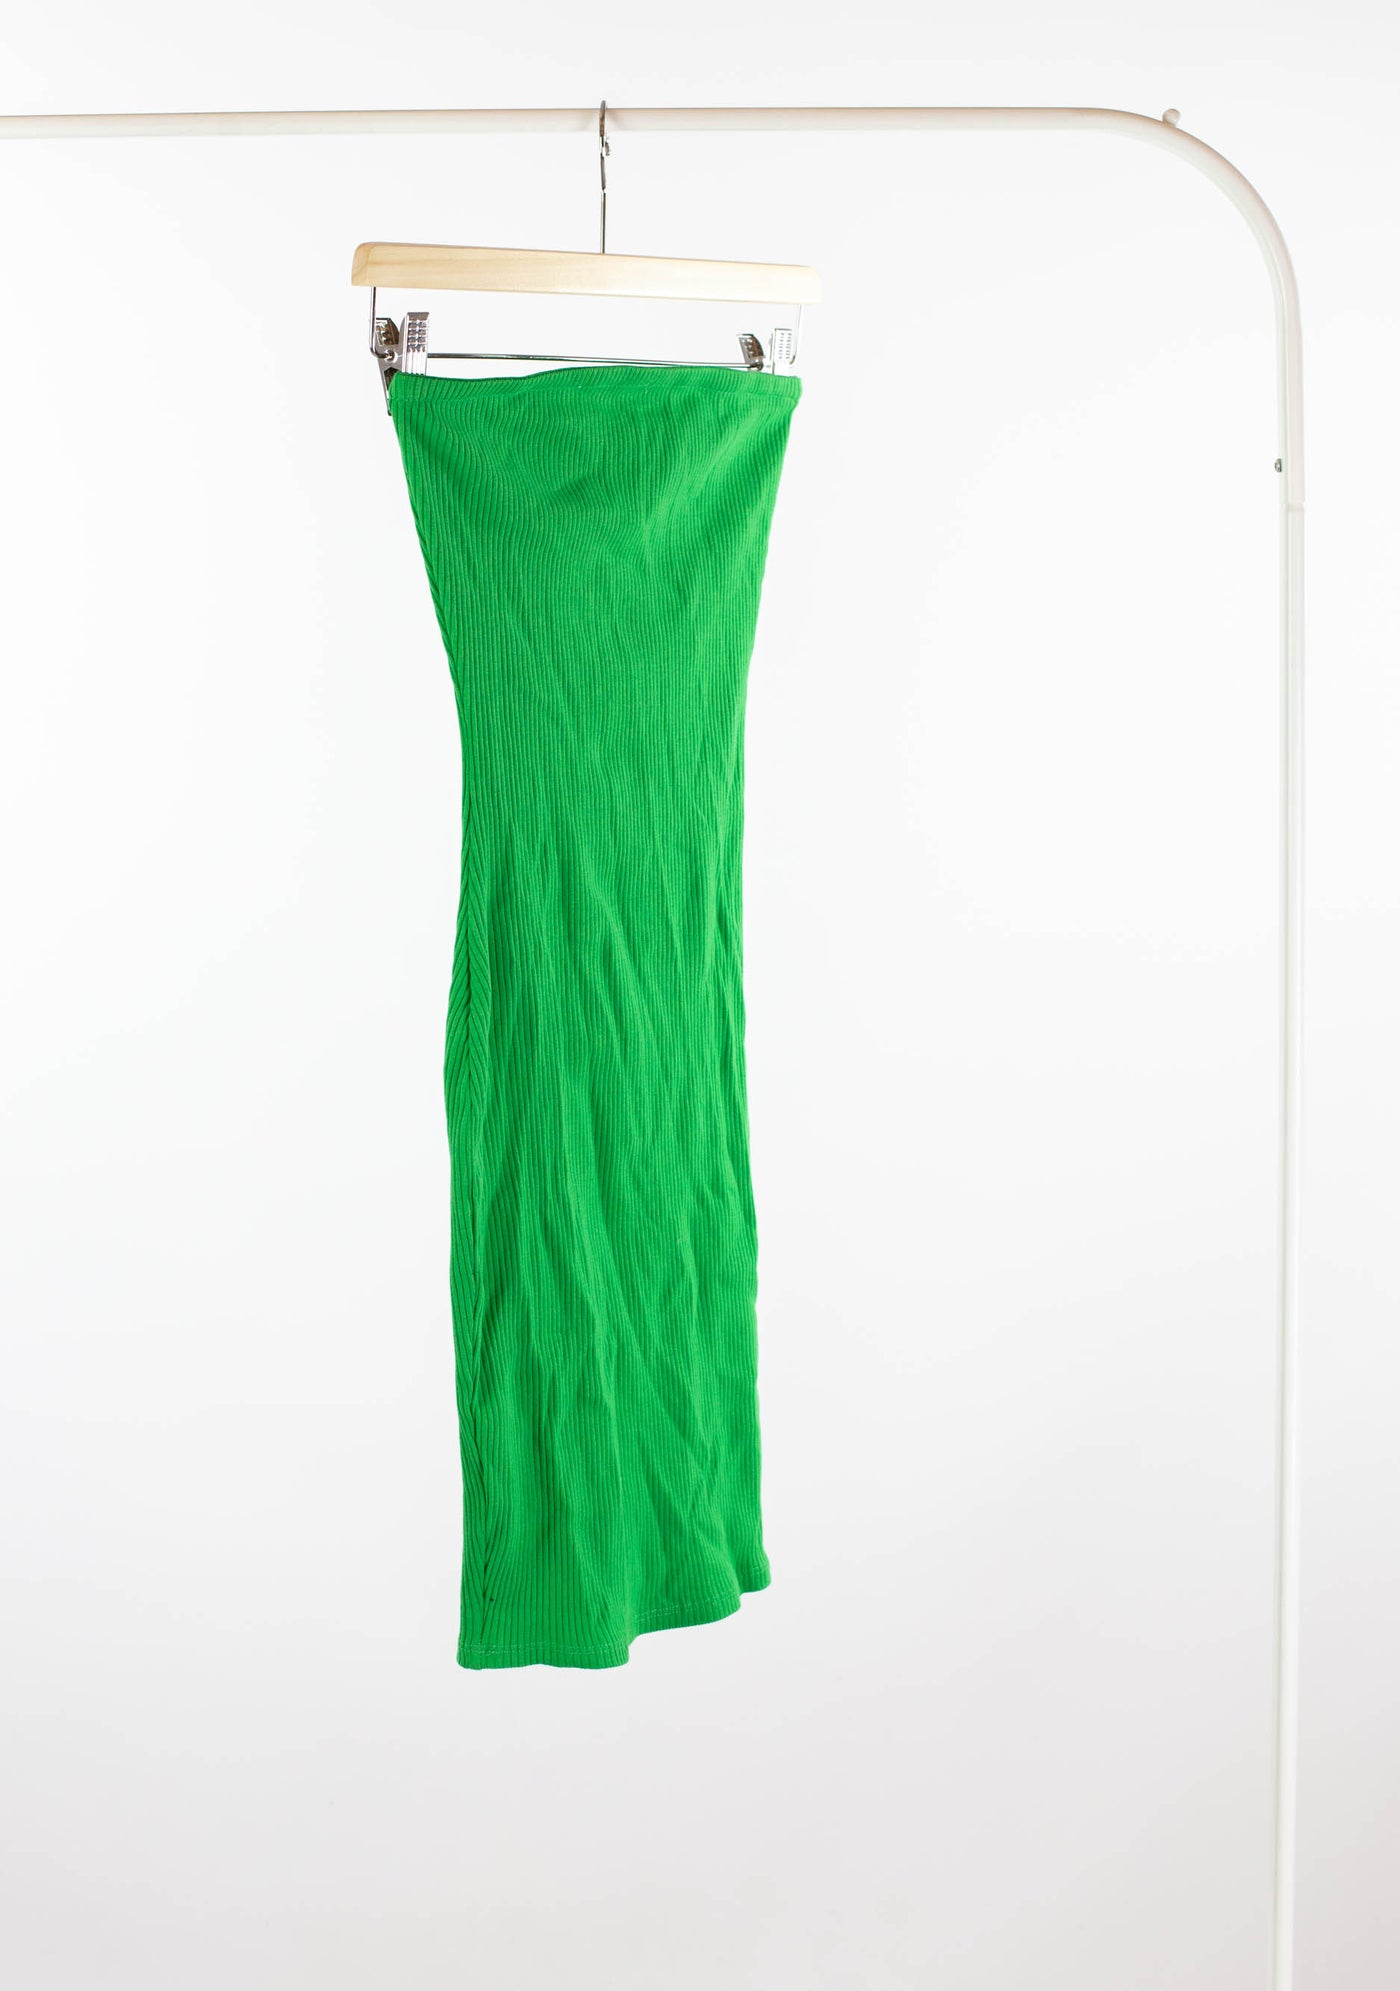 Vestido verde de canalé